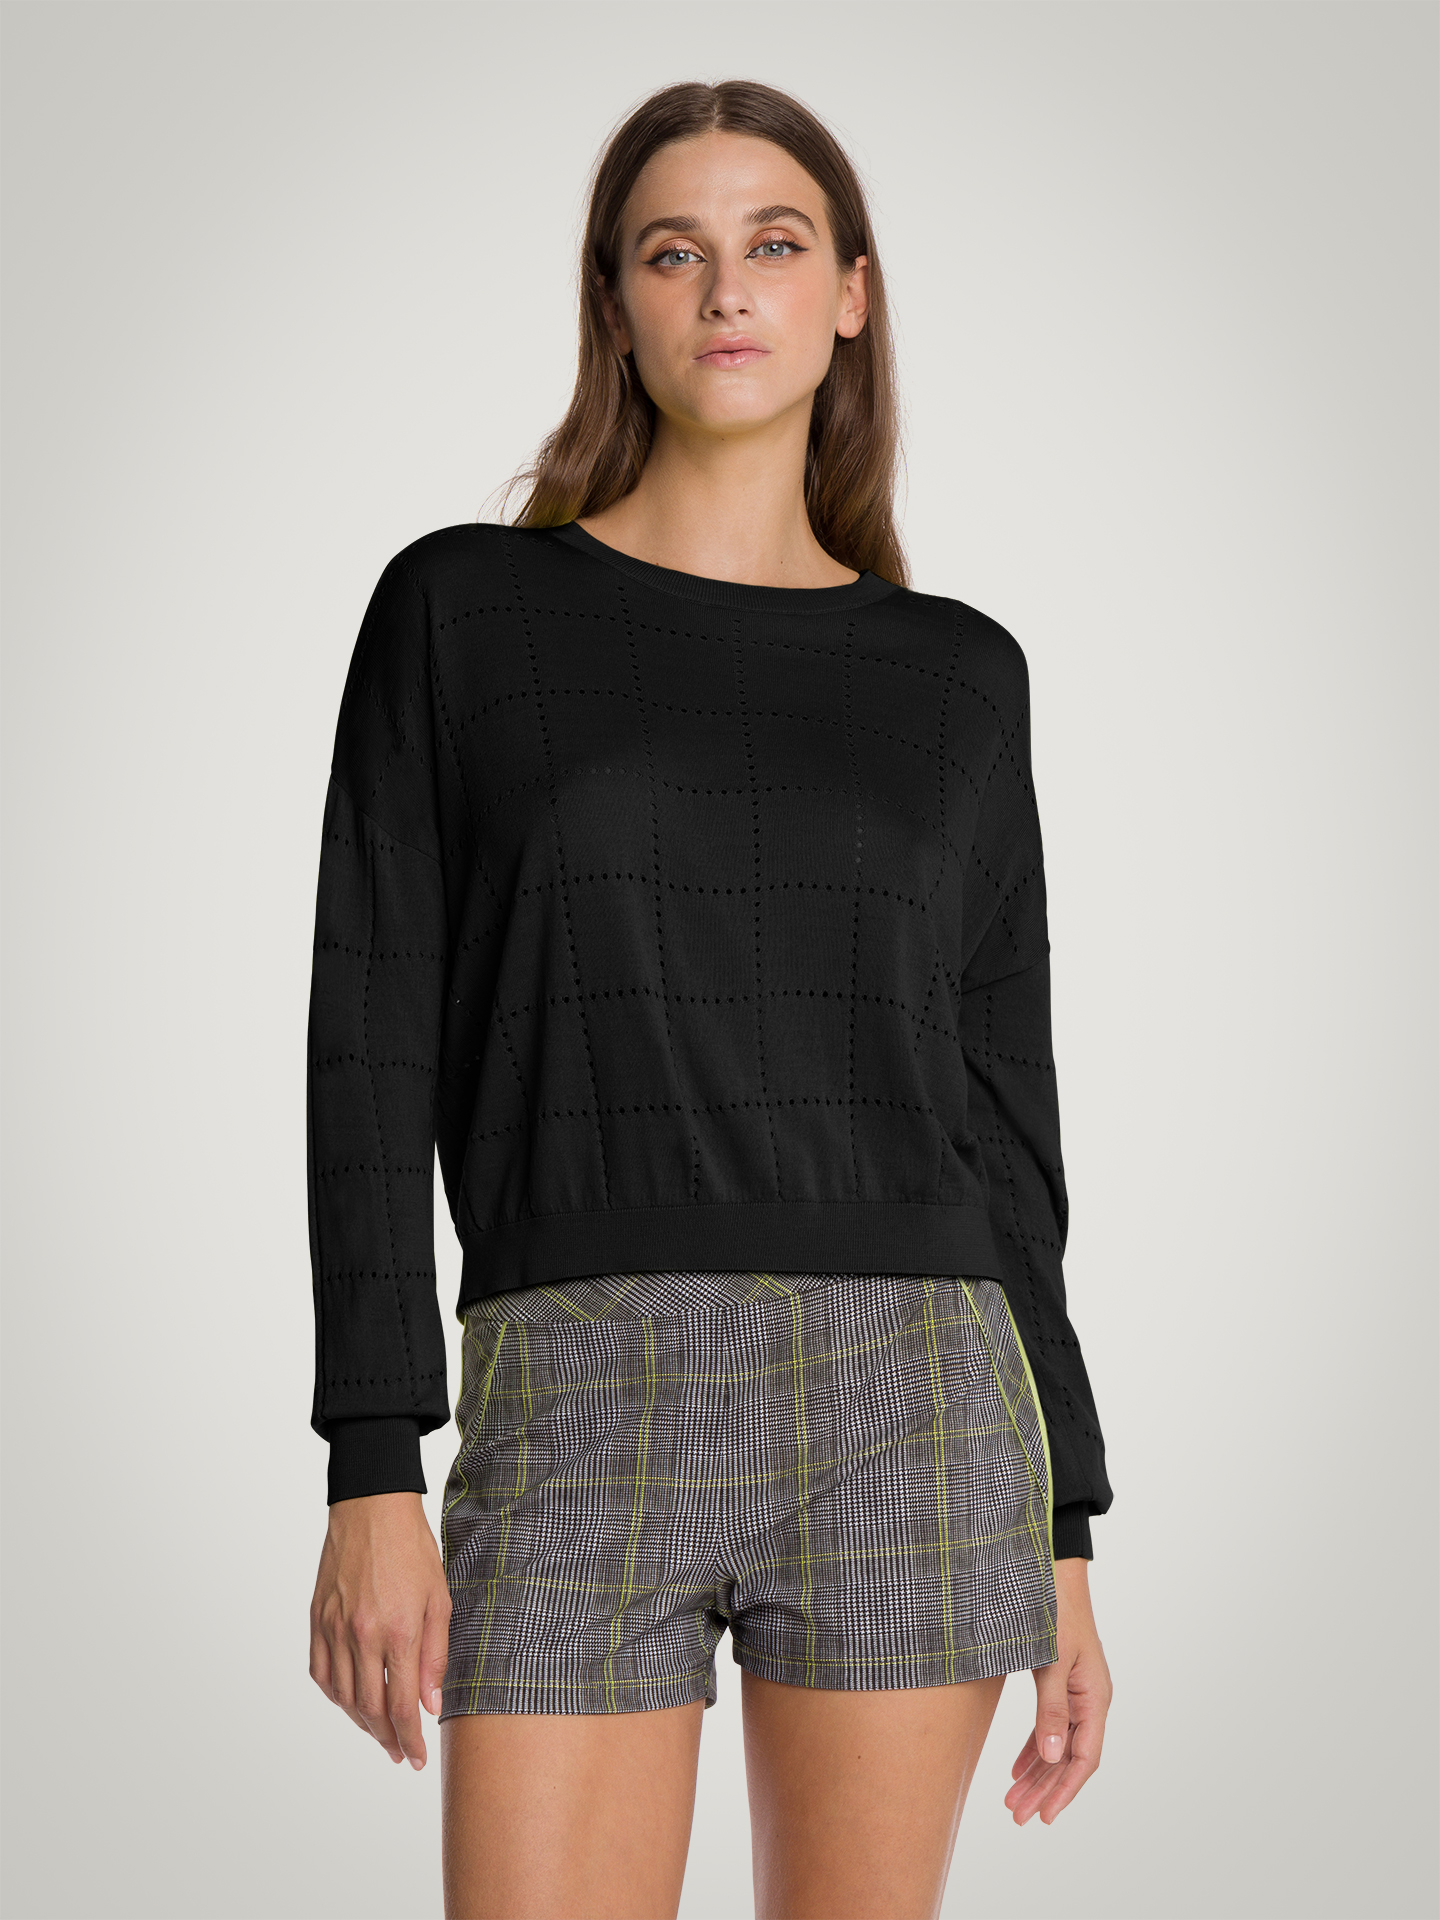 Wolford - Summer Knit Top Long Sleeves, Frau, black, Größe: L günstig online kaufen